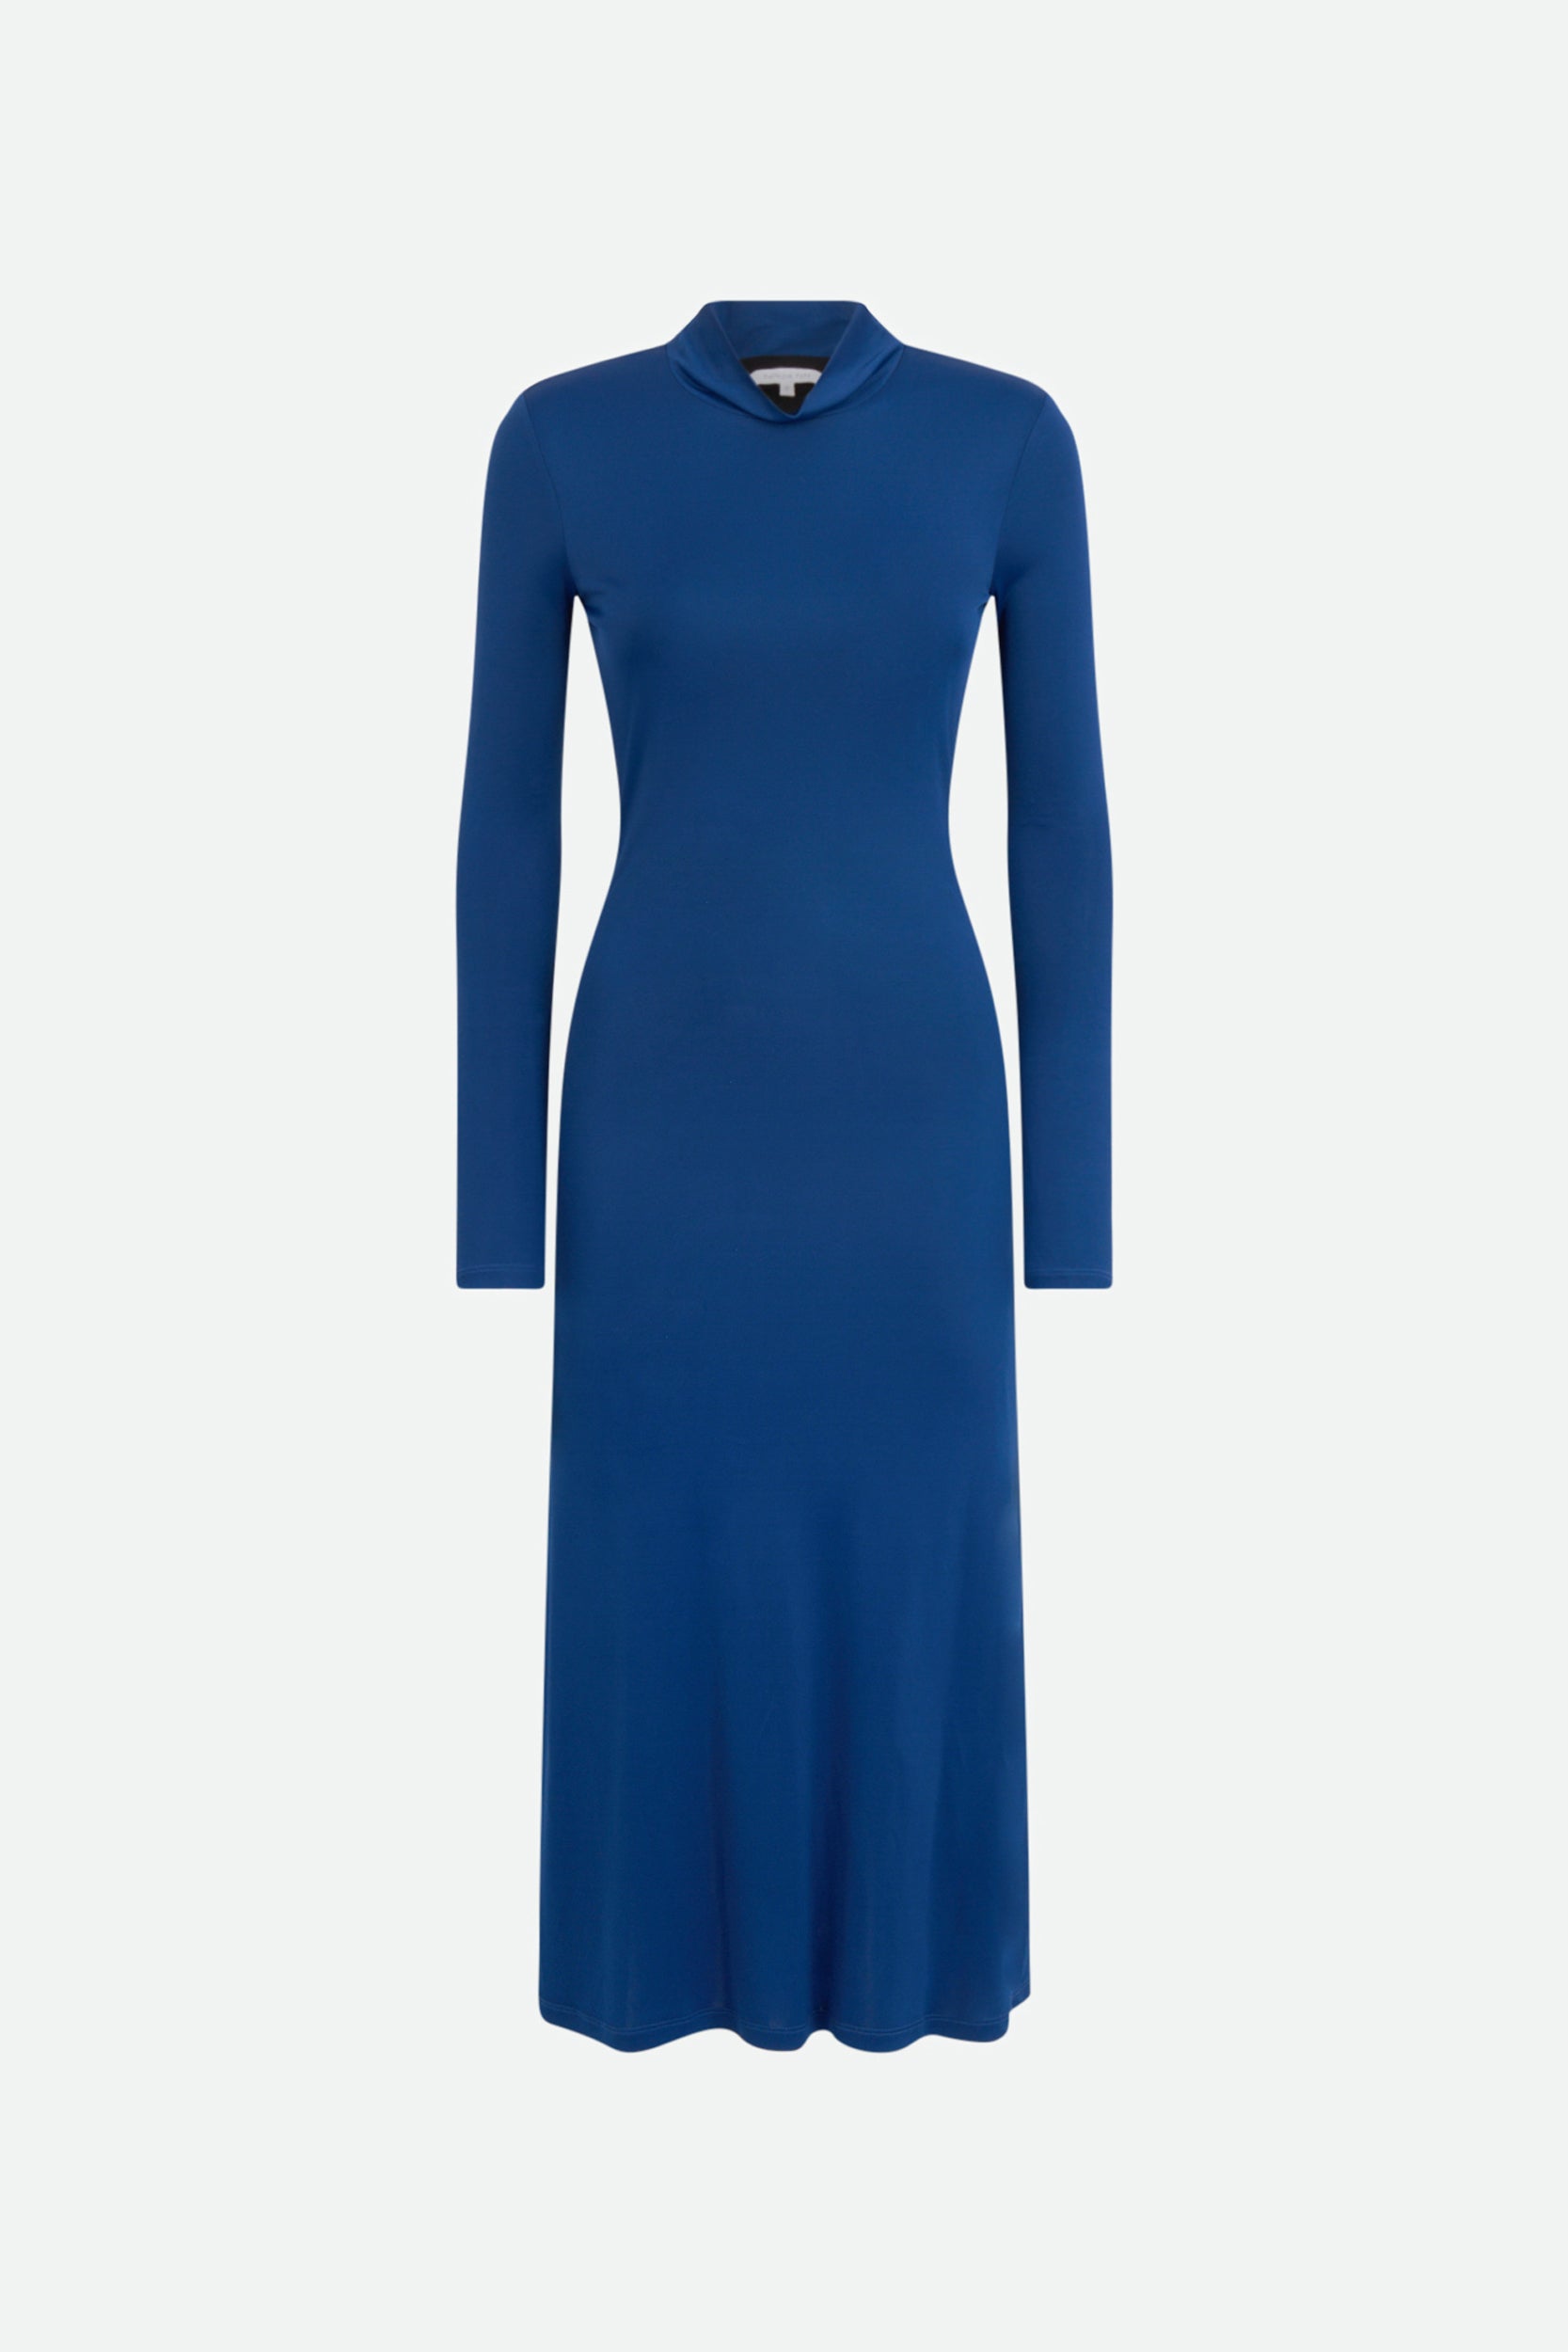 Patrizia Pepe Langes blaues Kleid